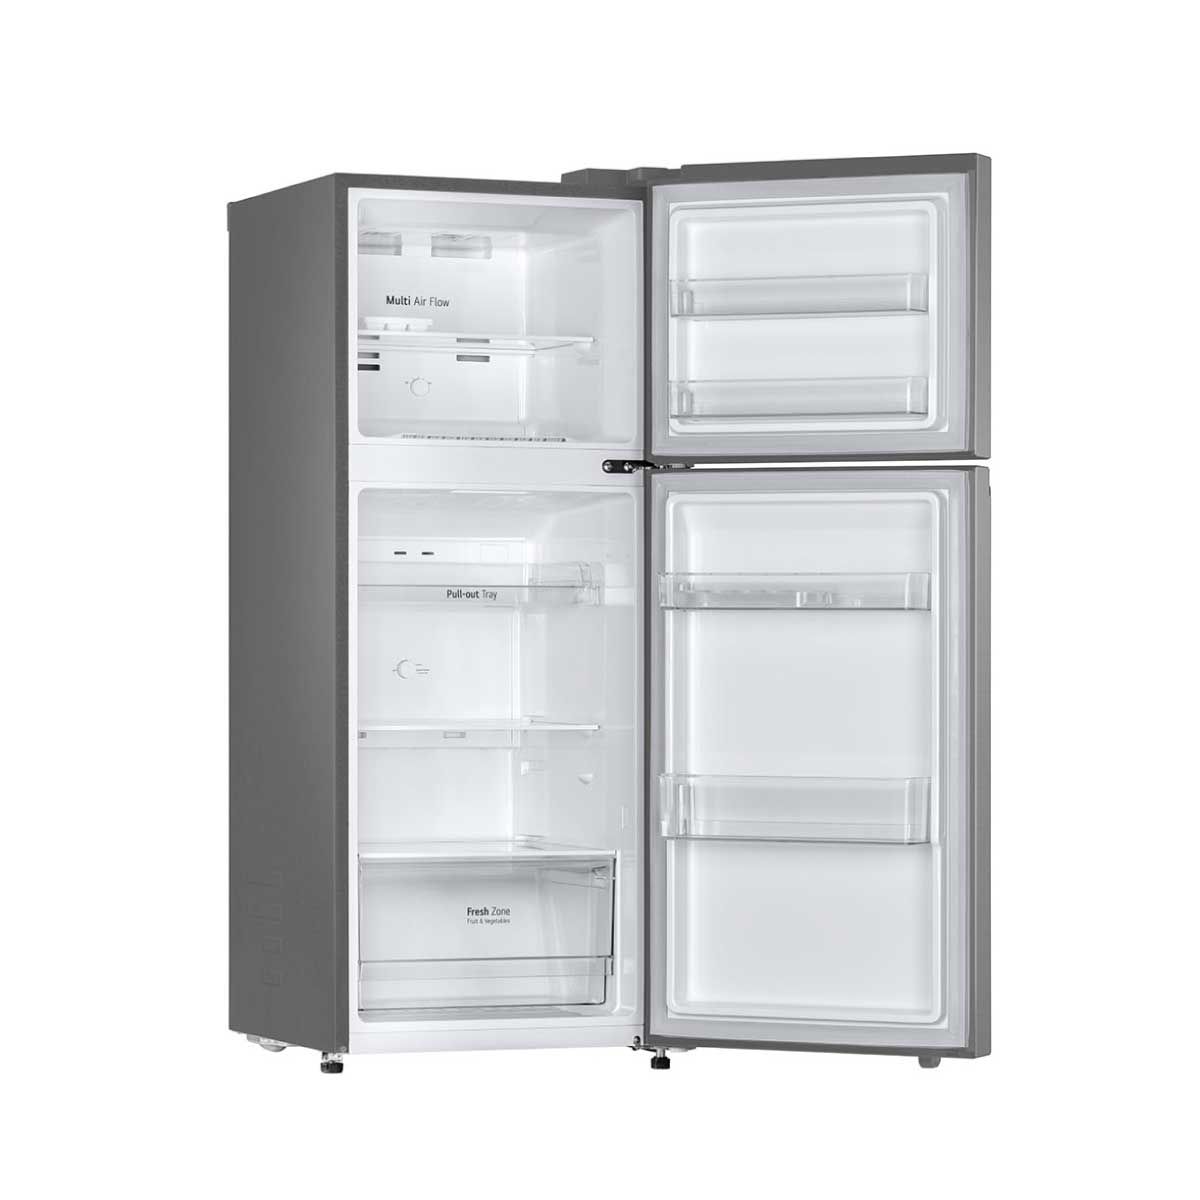 LG ตู้เย็น2ประตู7.7Q INVERTER สีเงิน รุ่นGV-B212PGMB